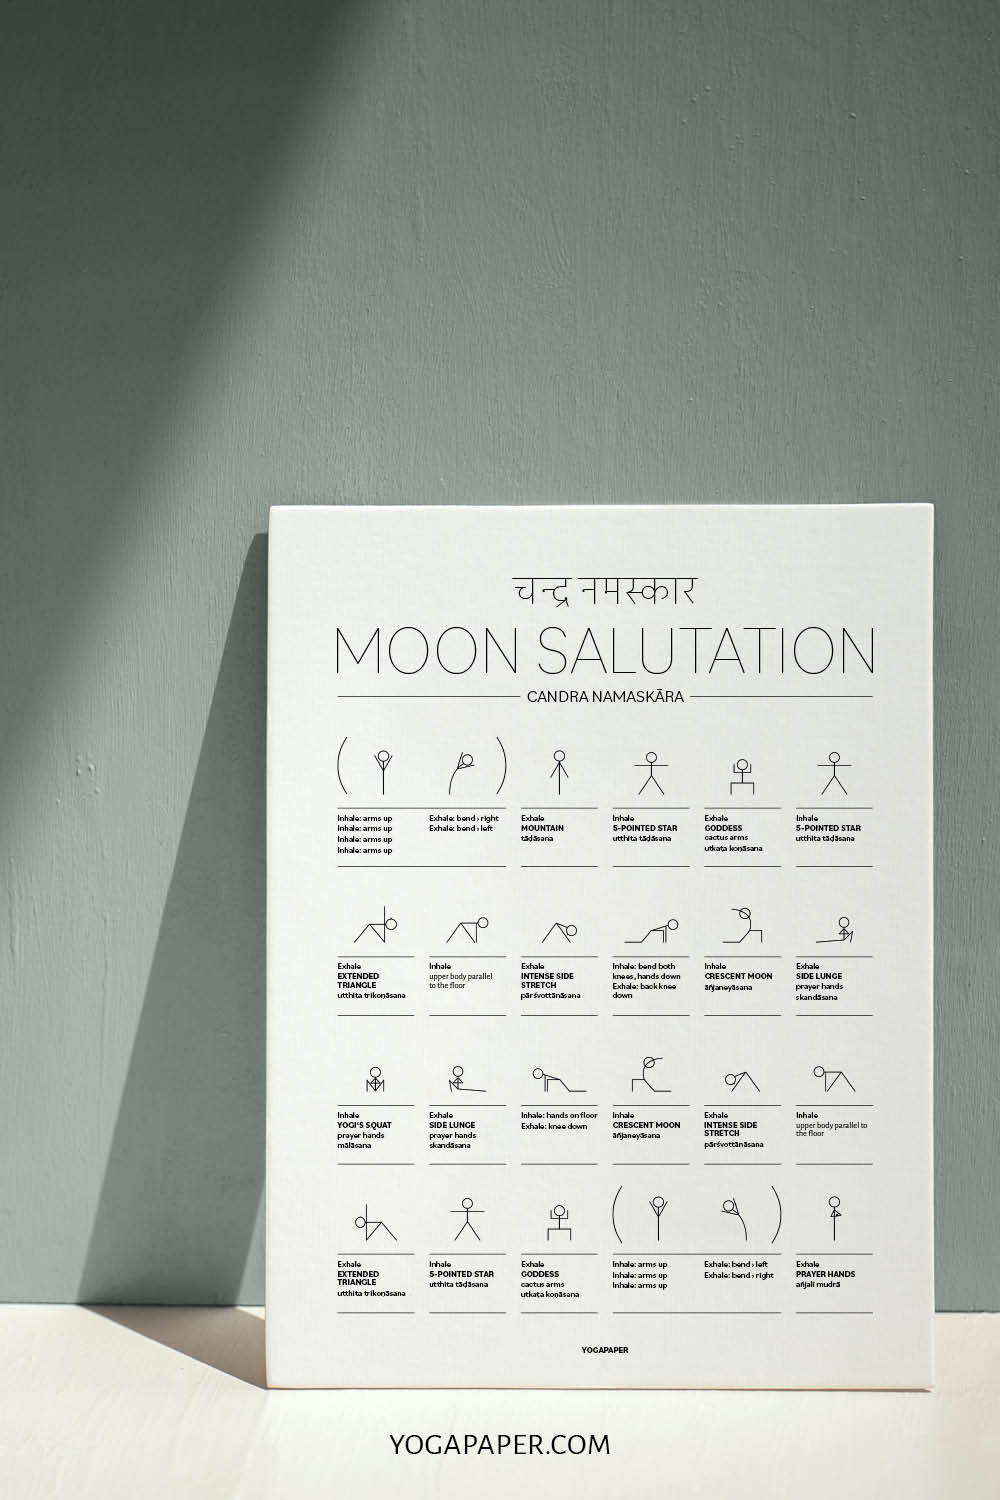 Moon Salutation Chandra Namaskar Yoga Poster – 7 Chakra Store